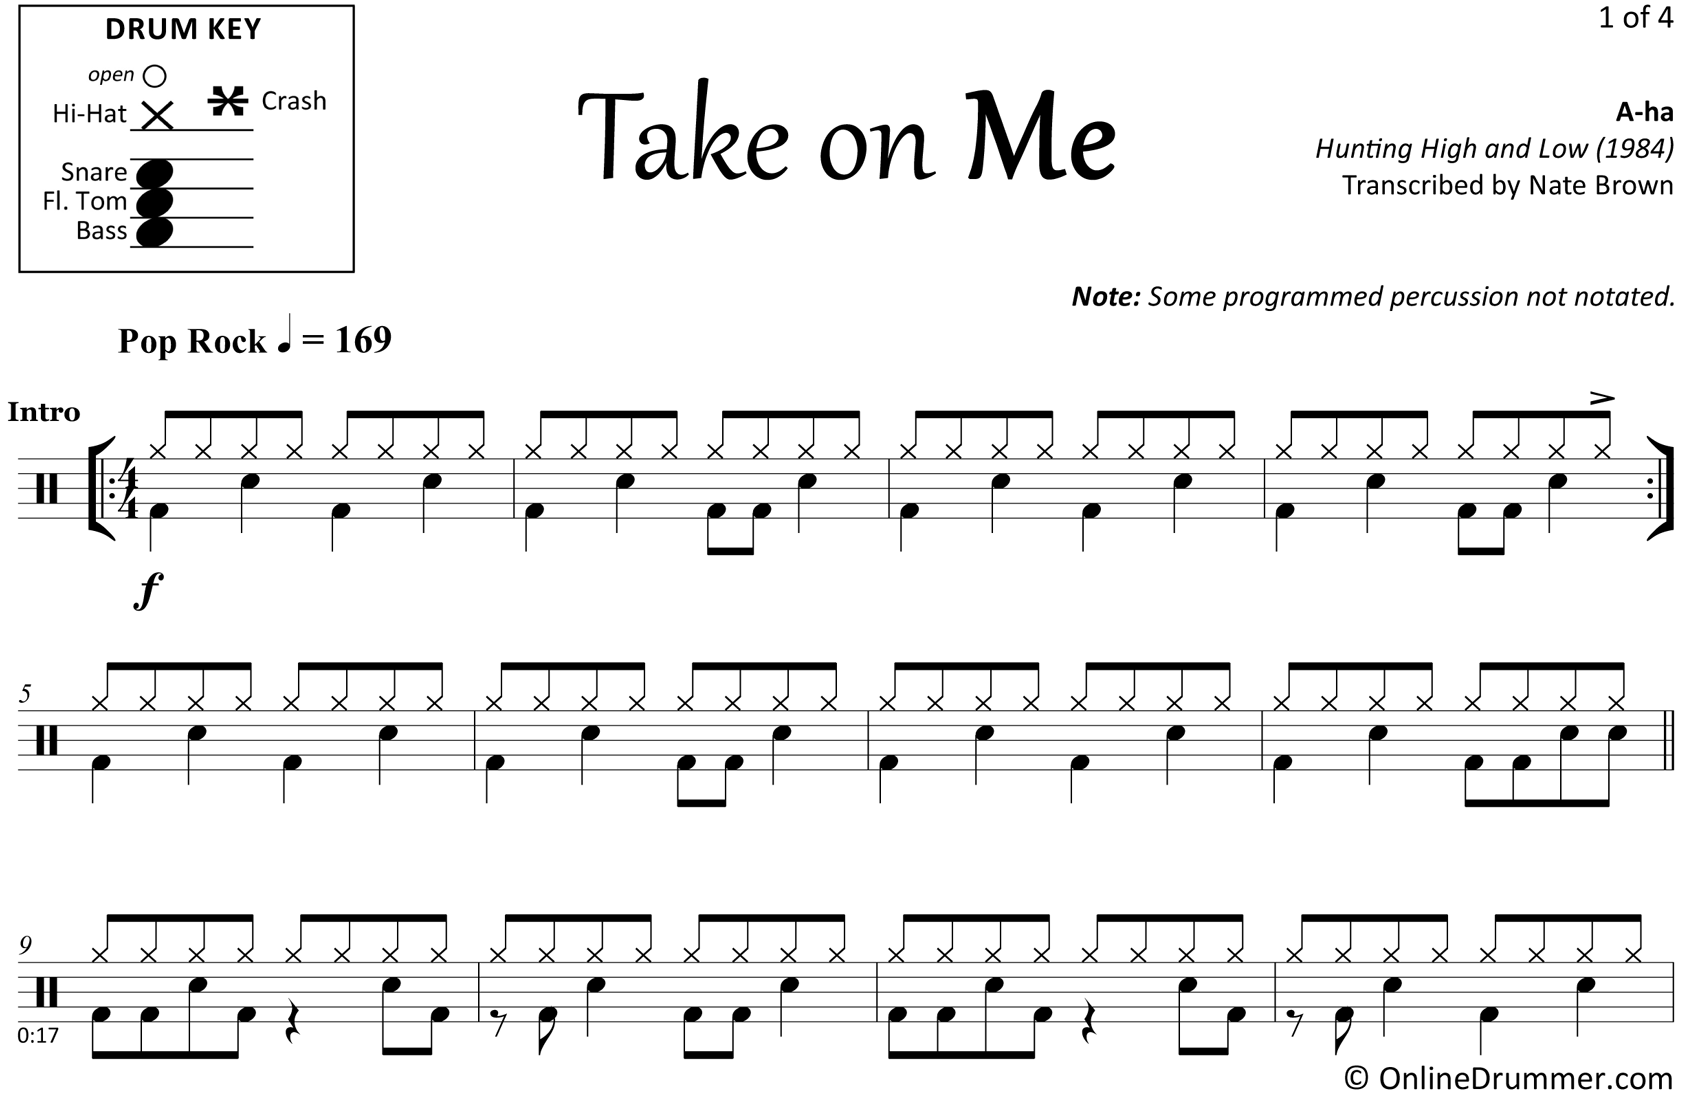 Take On Me - A-ha - Drum Sheet Music